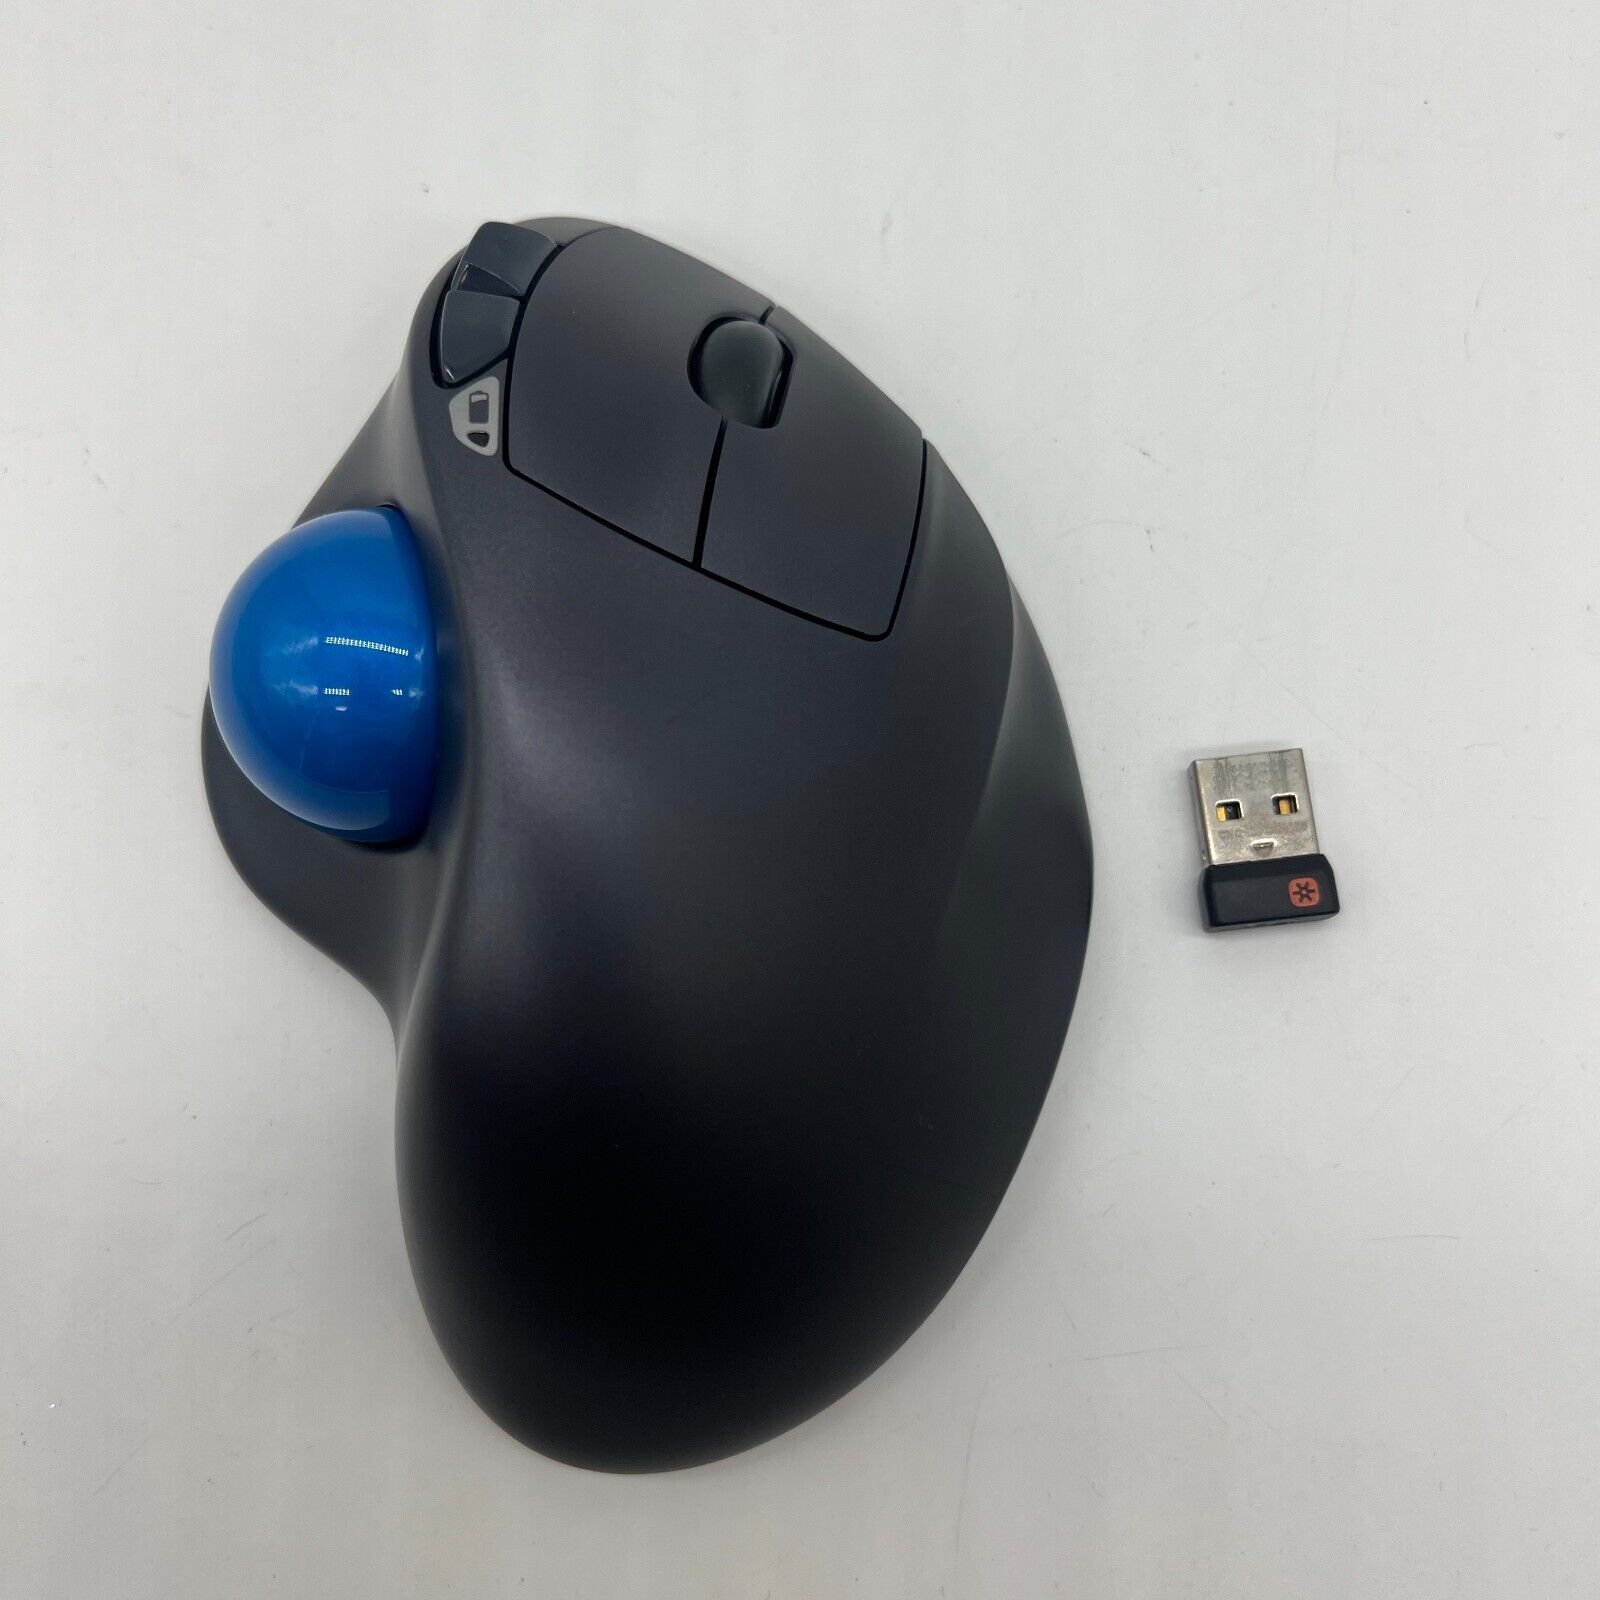 Logitech M570 Wireless USB Trackball Mouse Dark Gray USB Dongle Receiver WORKS